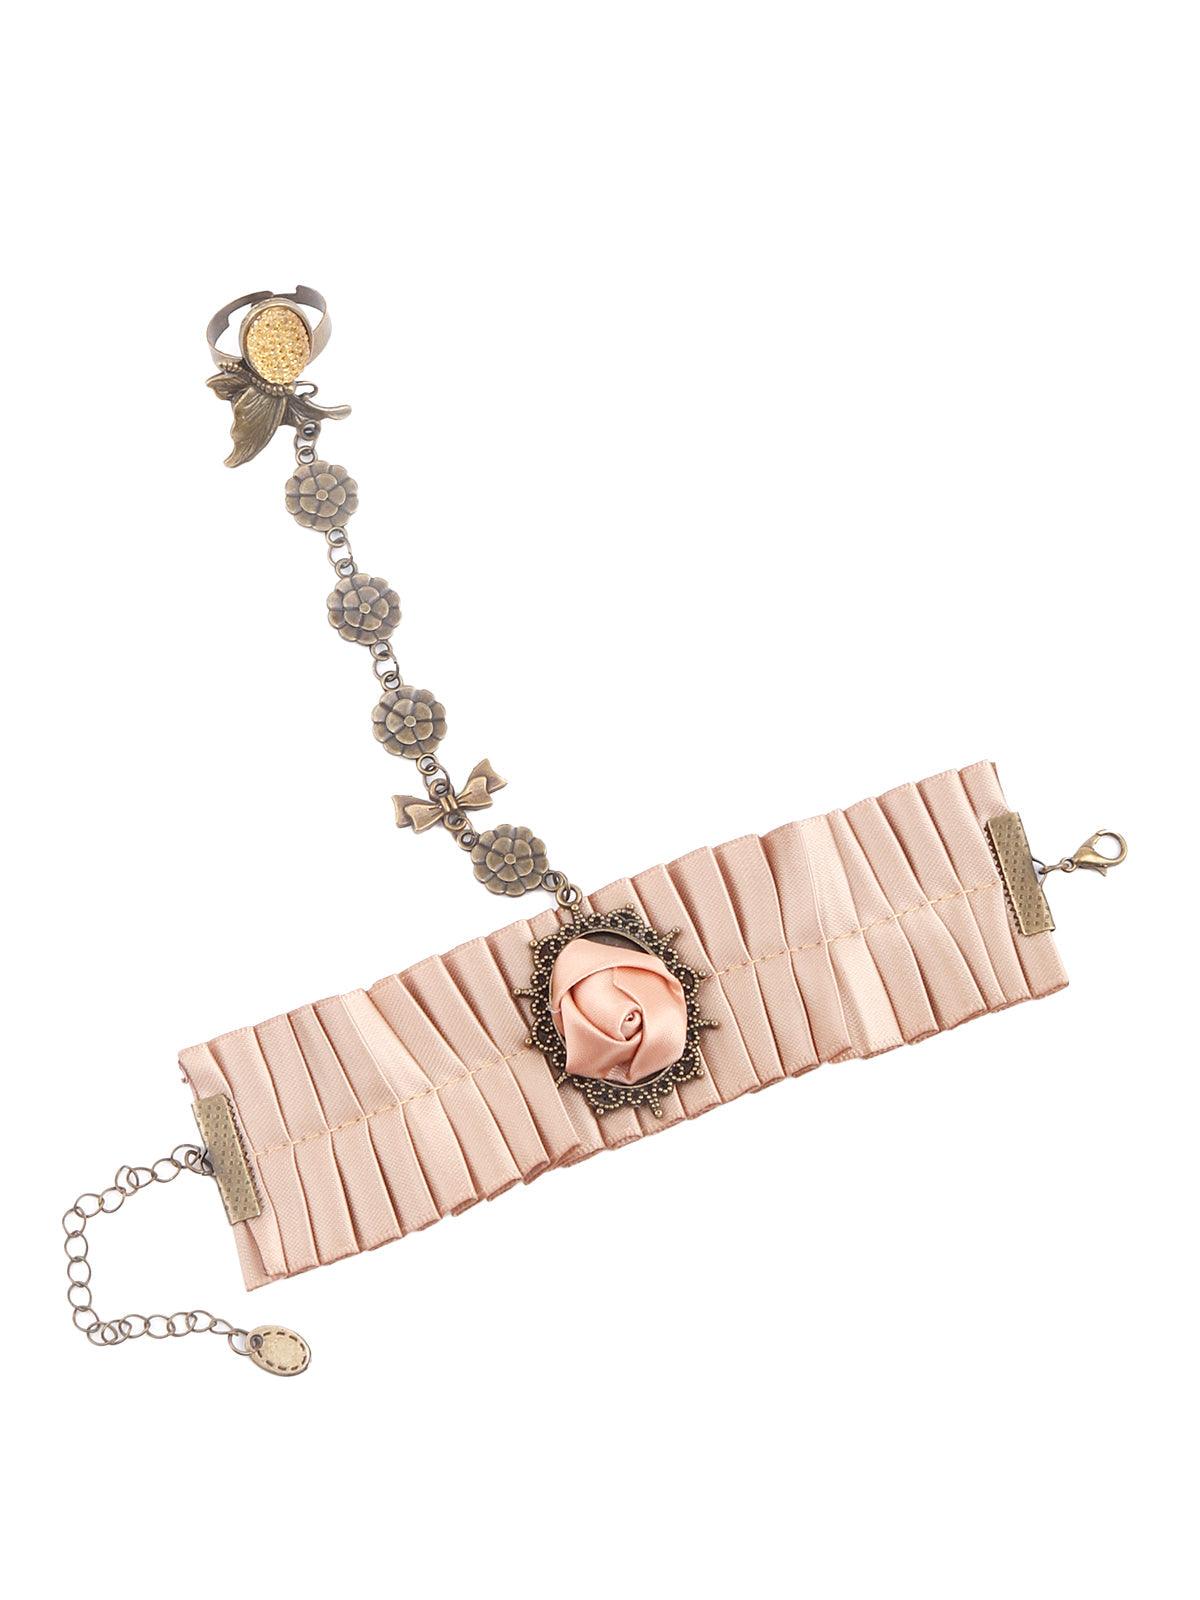 Peach plated floral bracelet ring for women - Odette